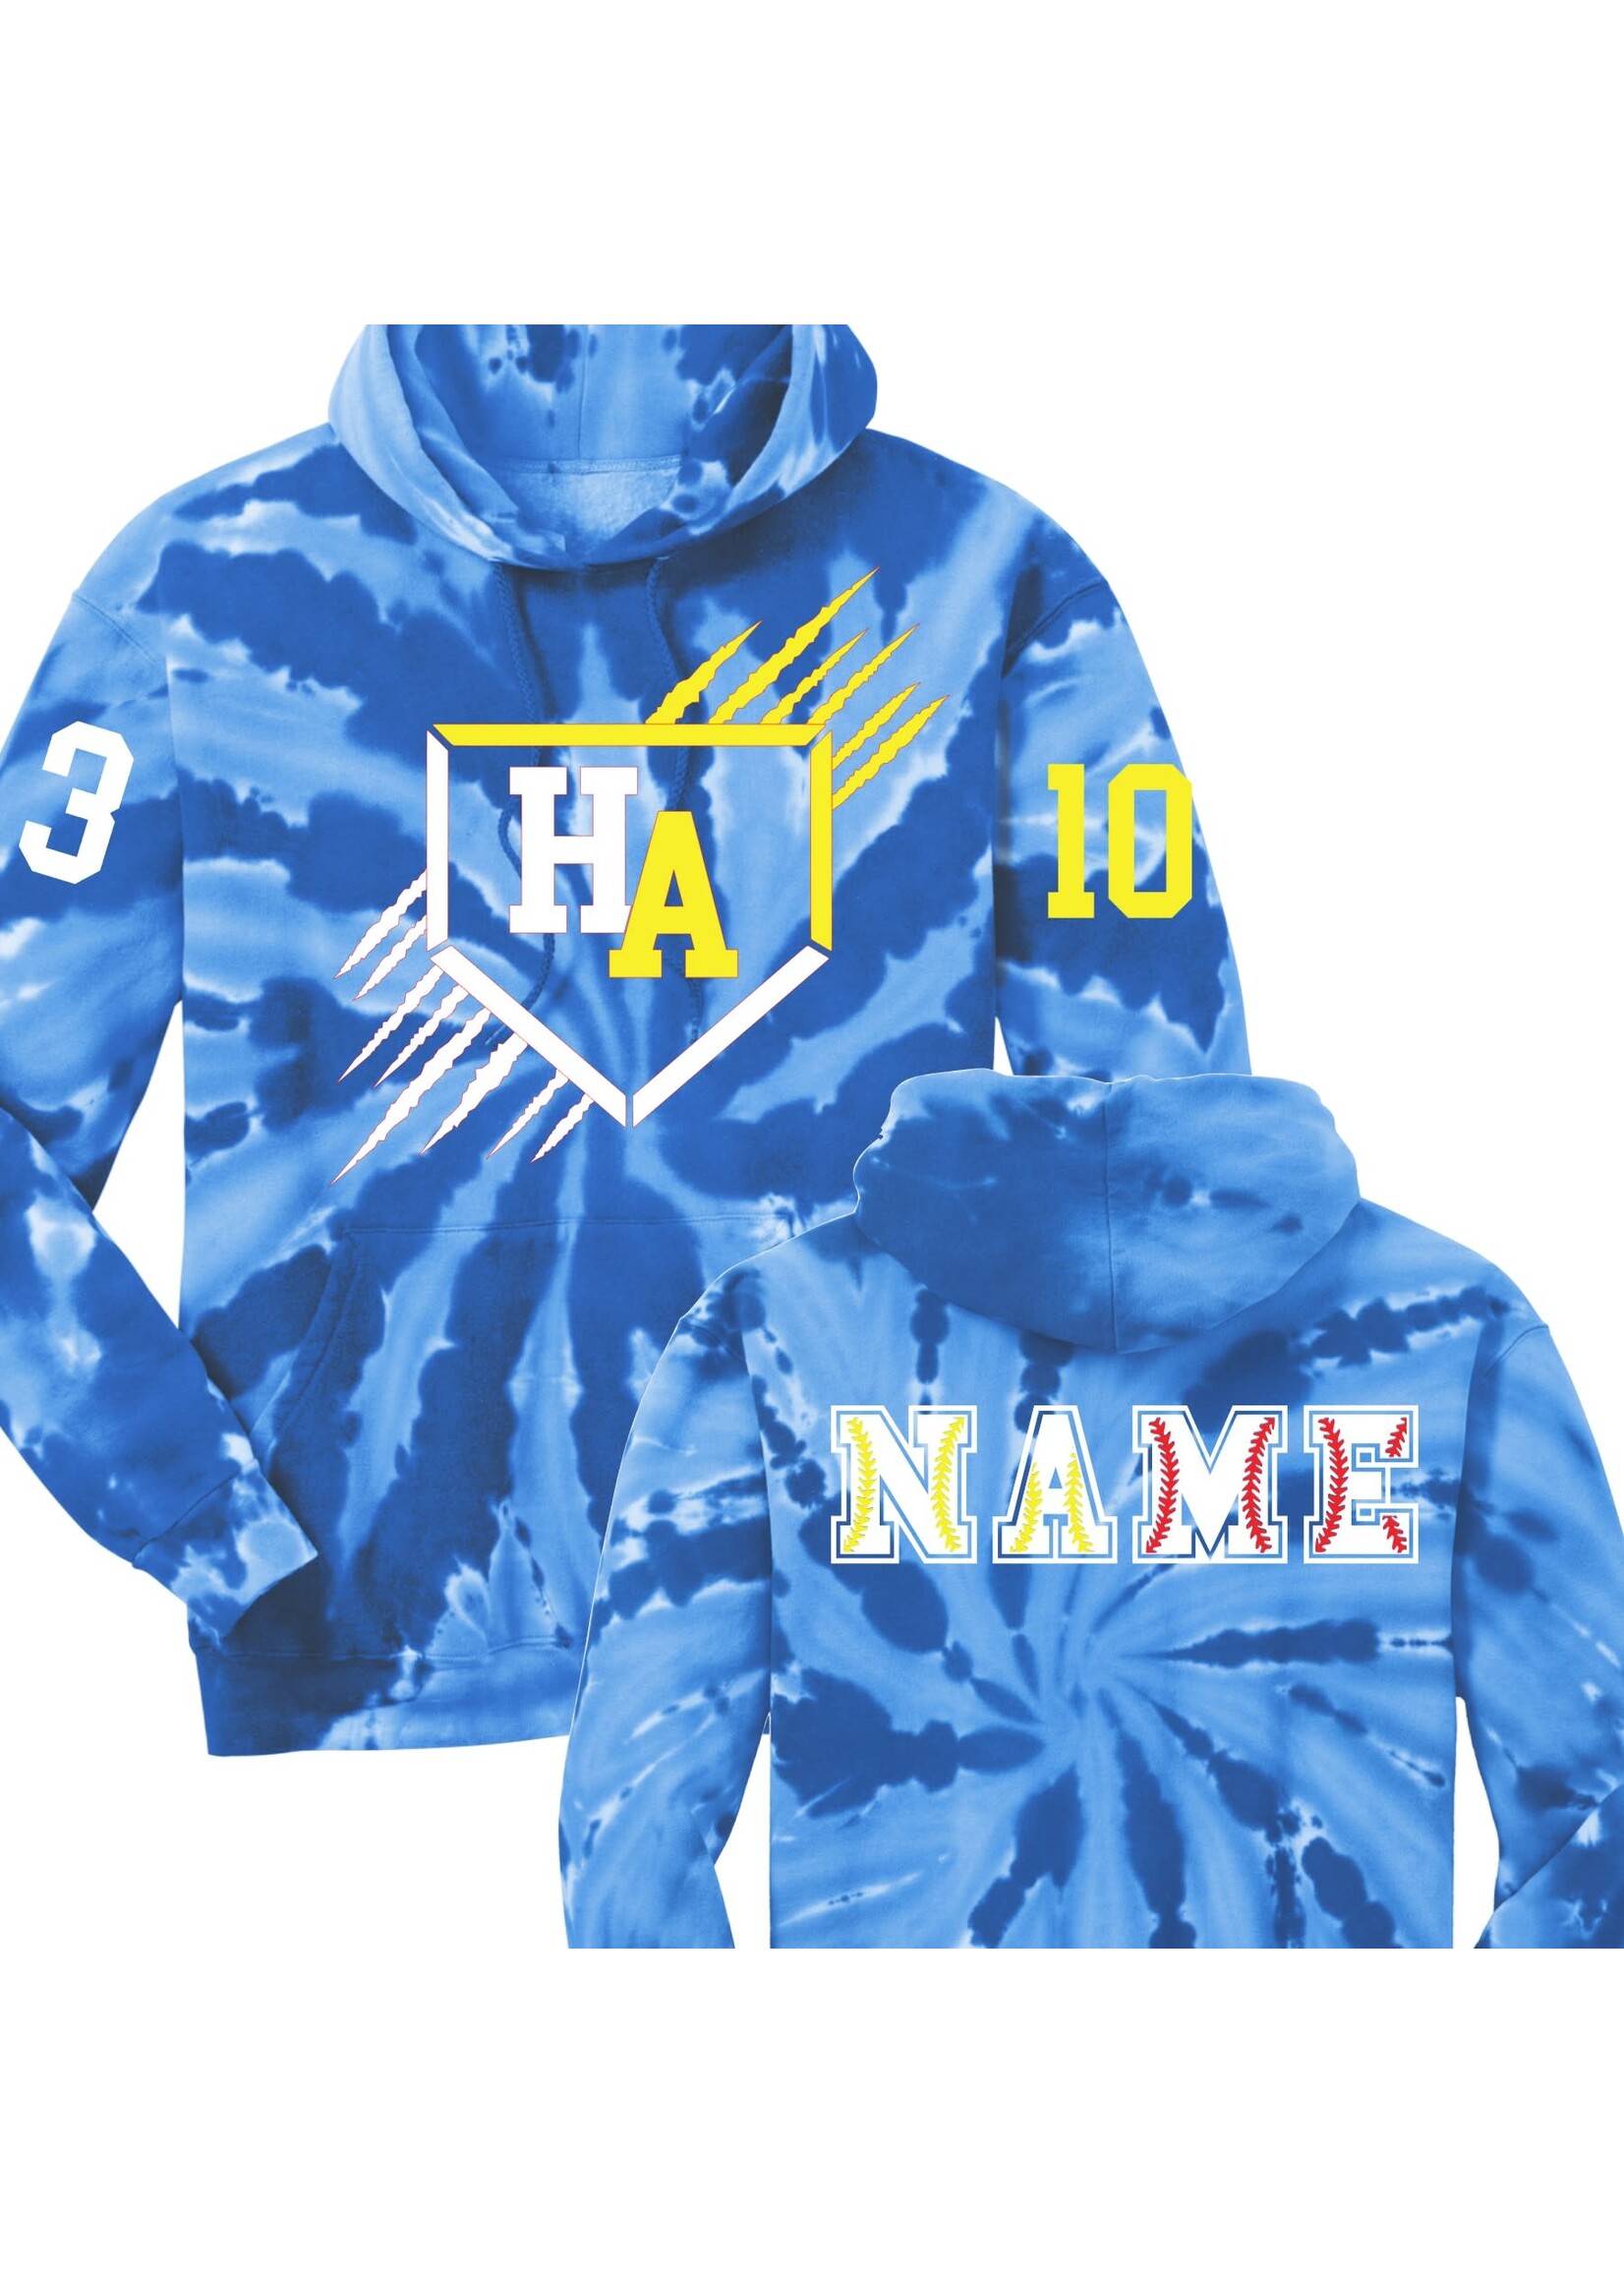 Hanover Area Baseball/Softball Mash up Tie Dye hoodie